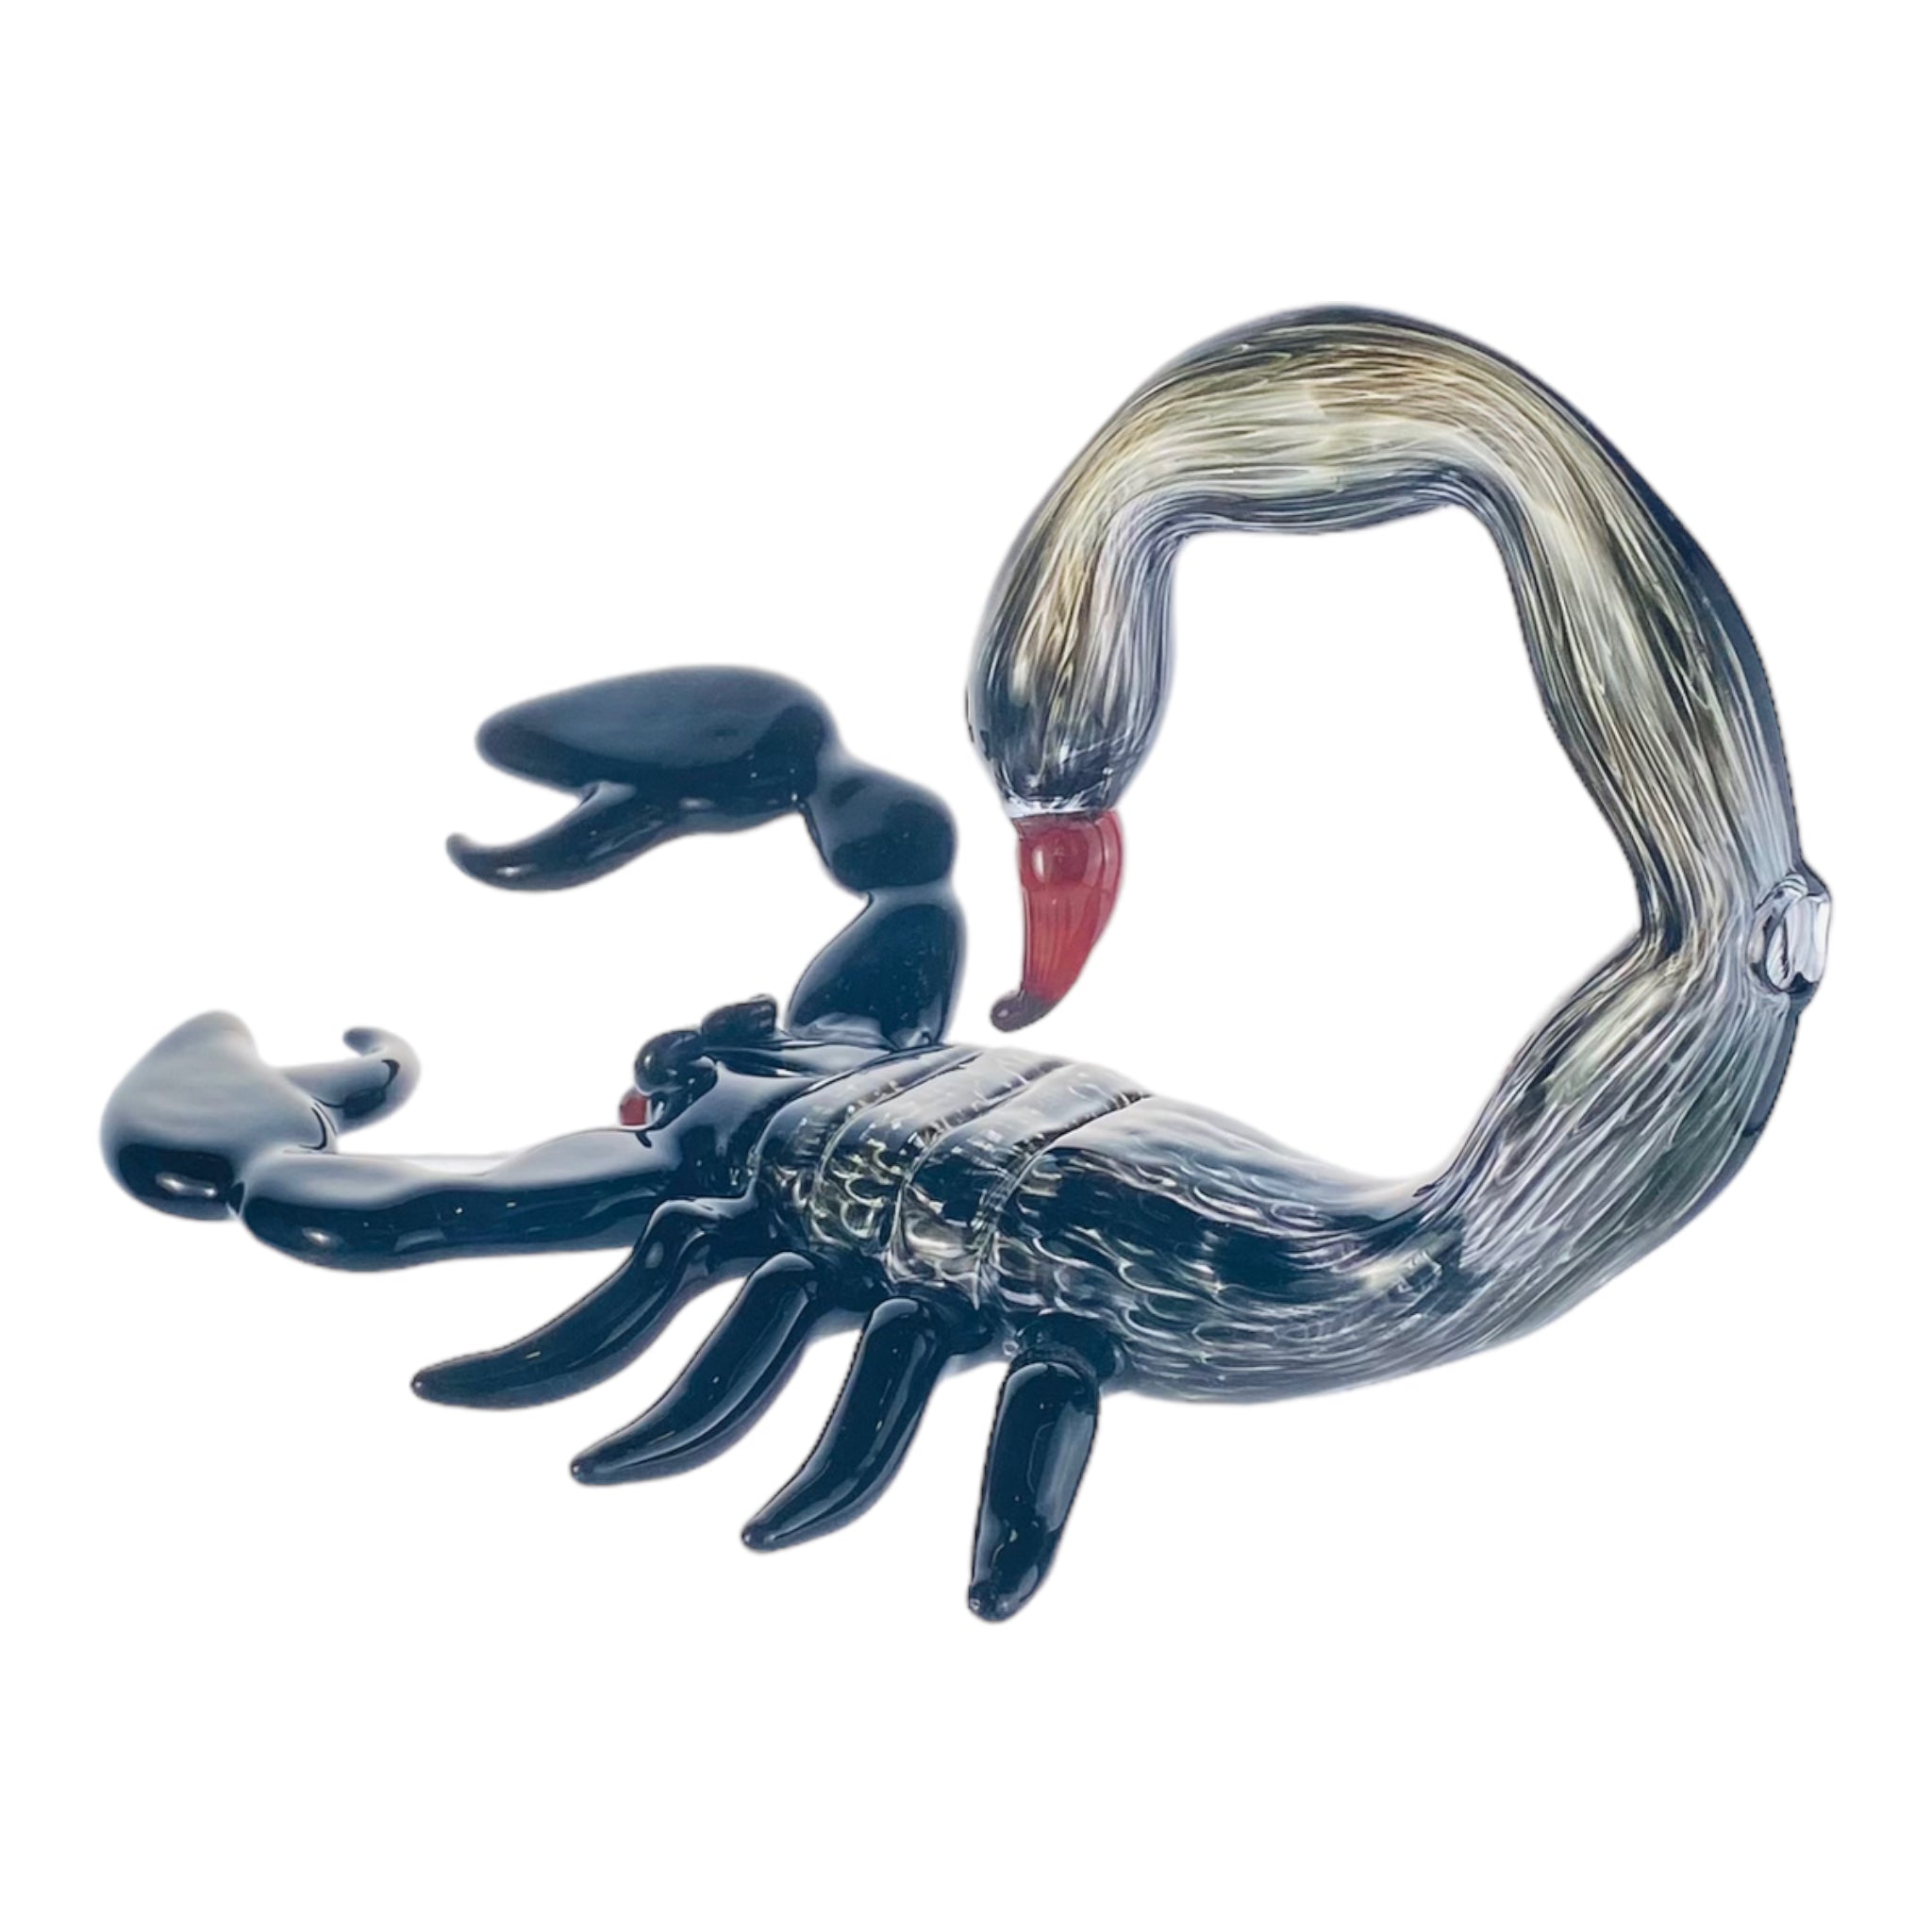 Daniels Glass Art - Glass Large Black Fat Tailed Scorpion Hand Pipe